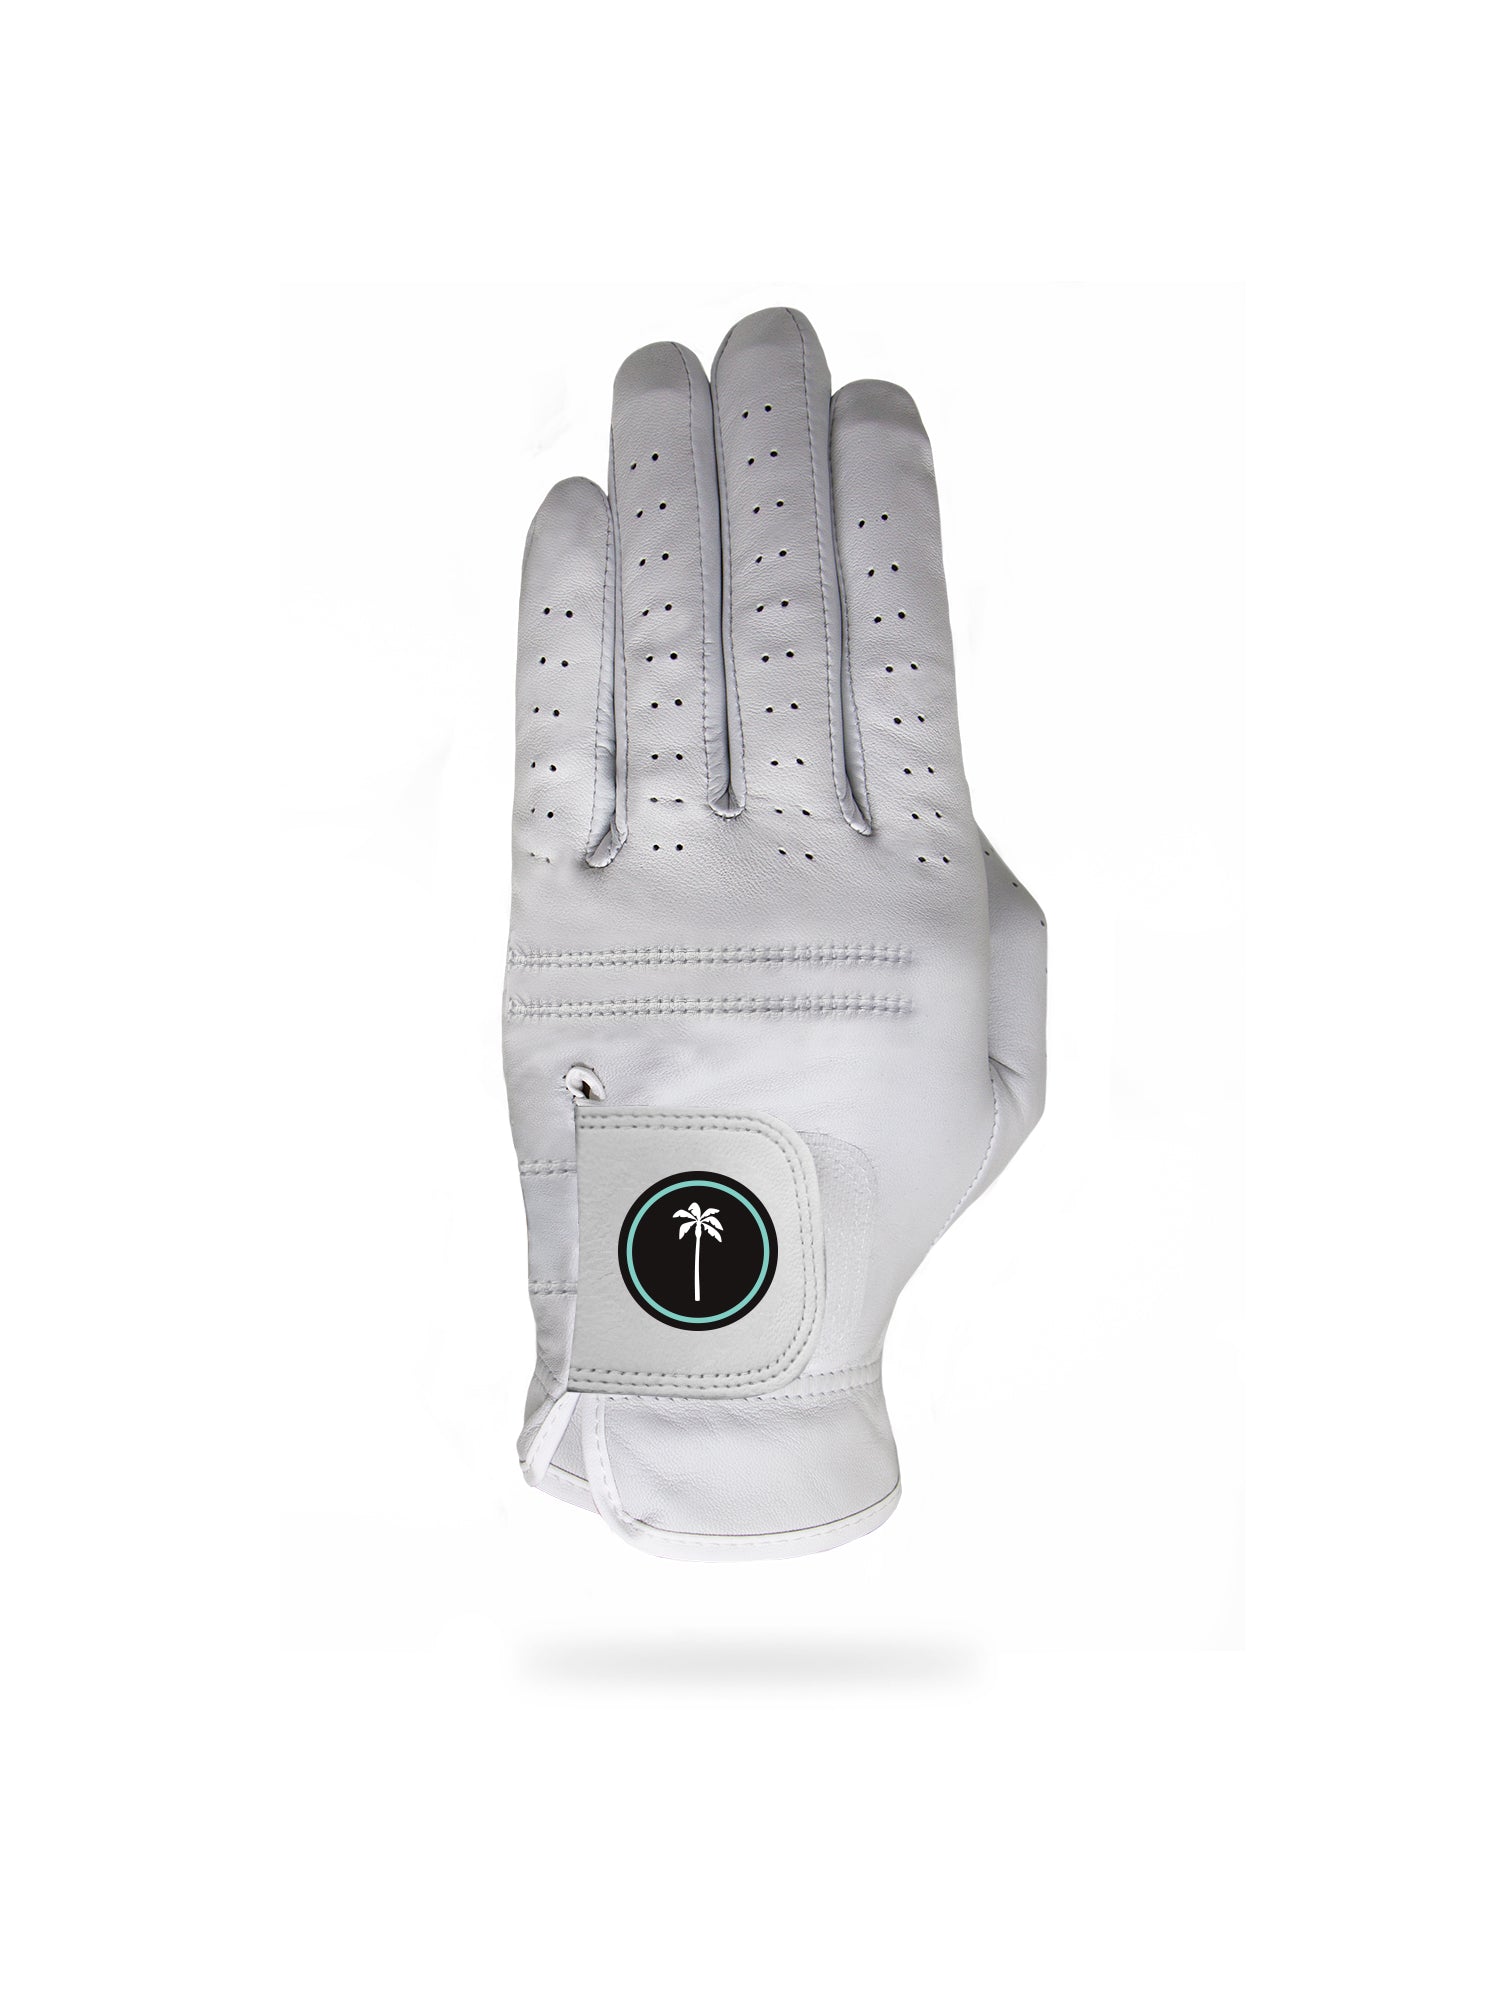 Palm Golf Co. 2023 Women's Canvas Glove (White)